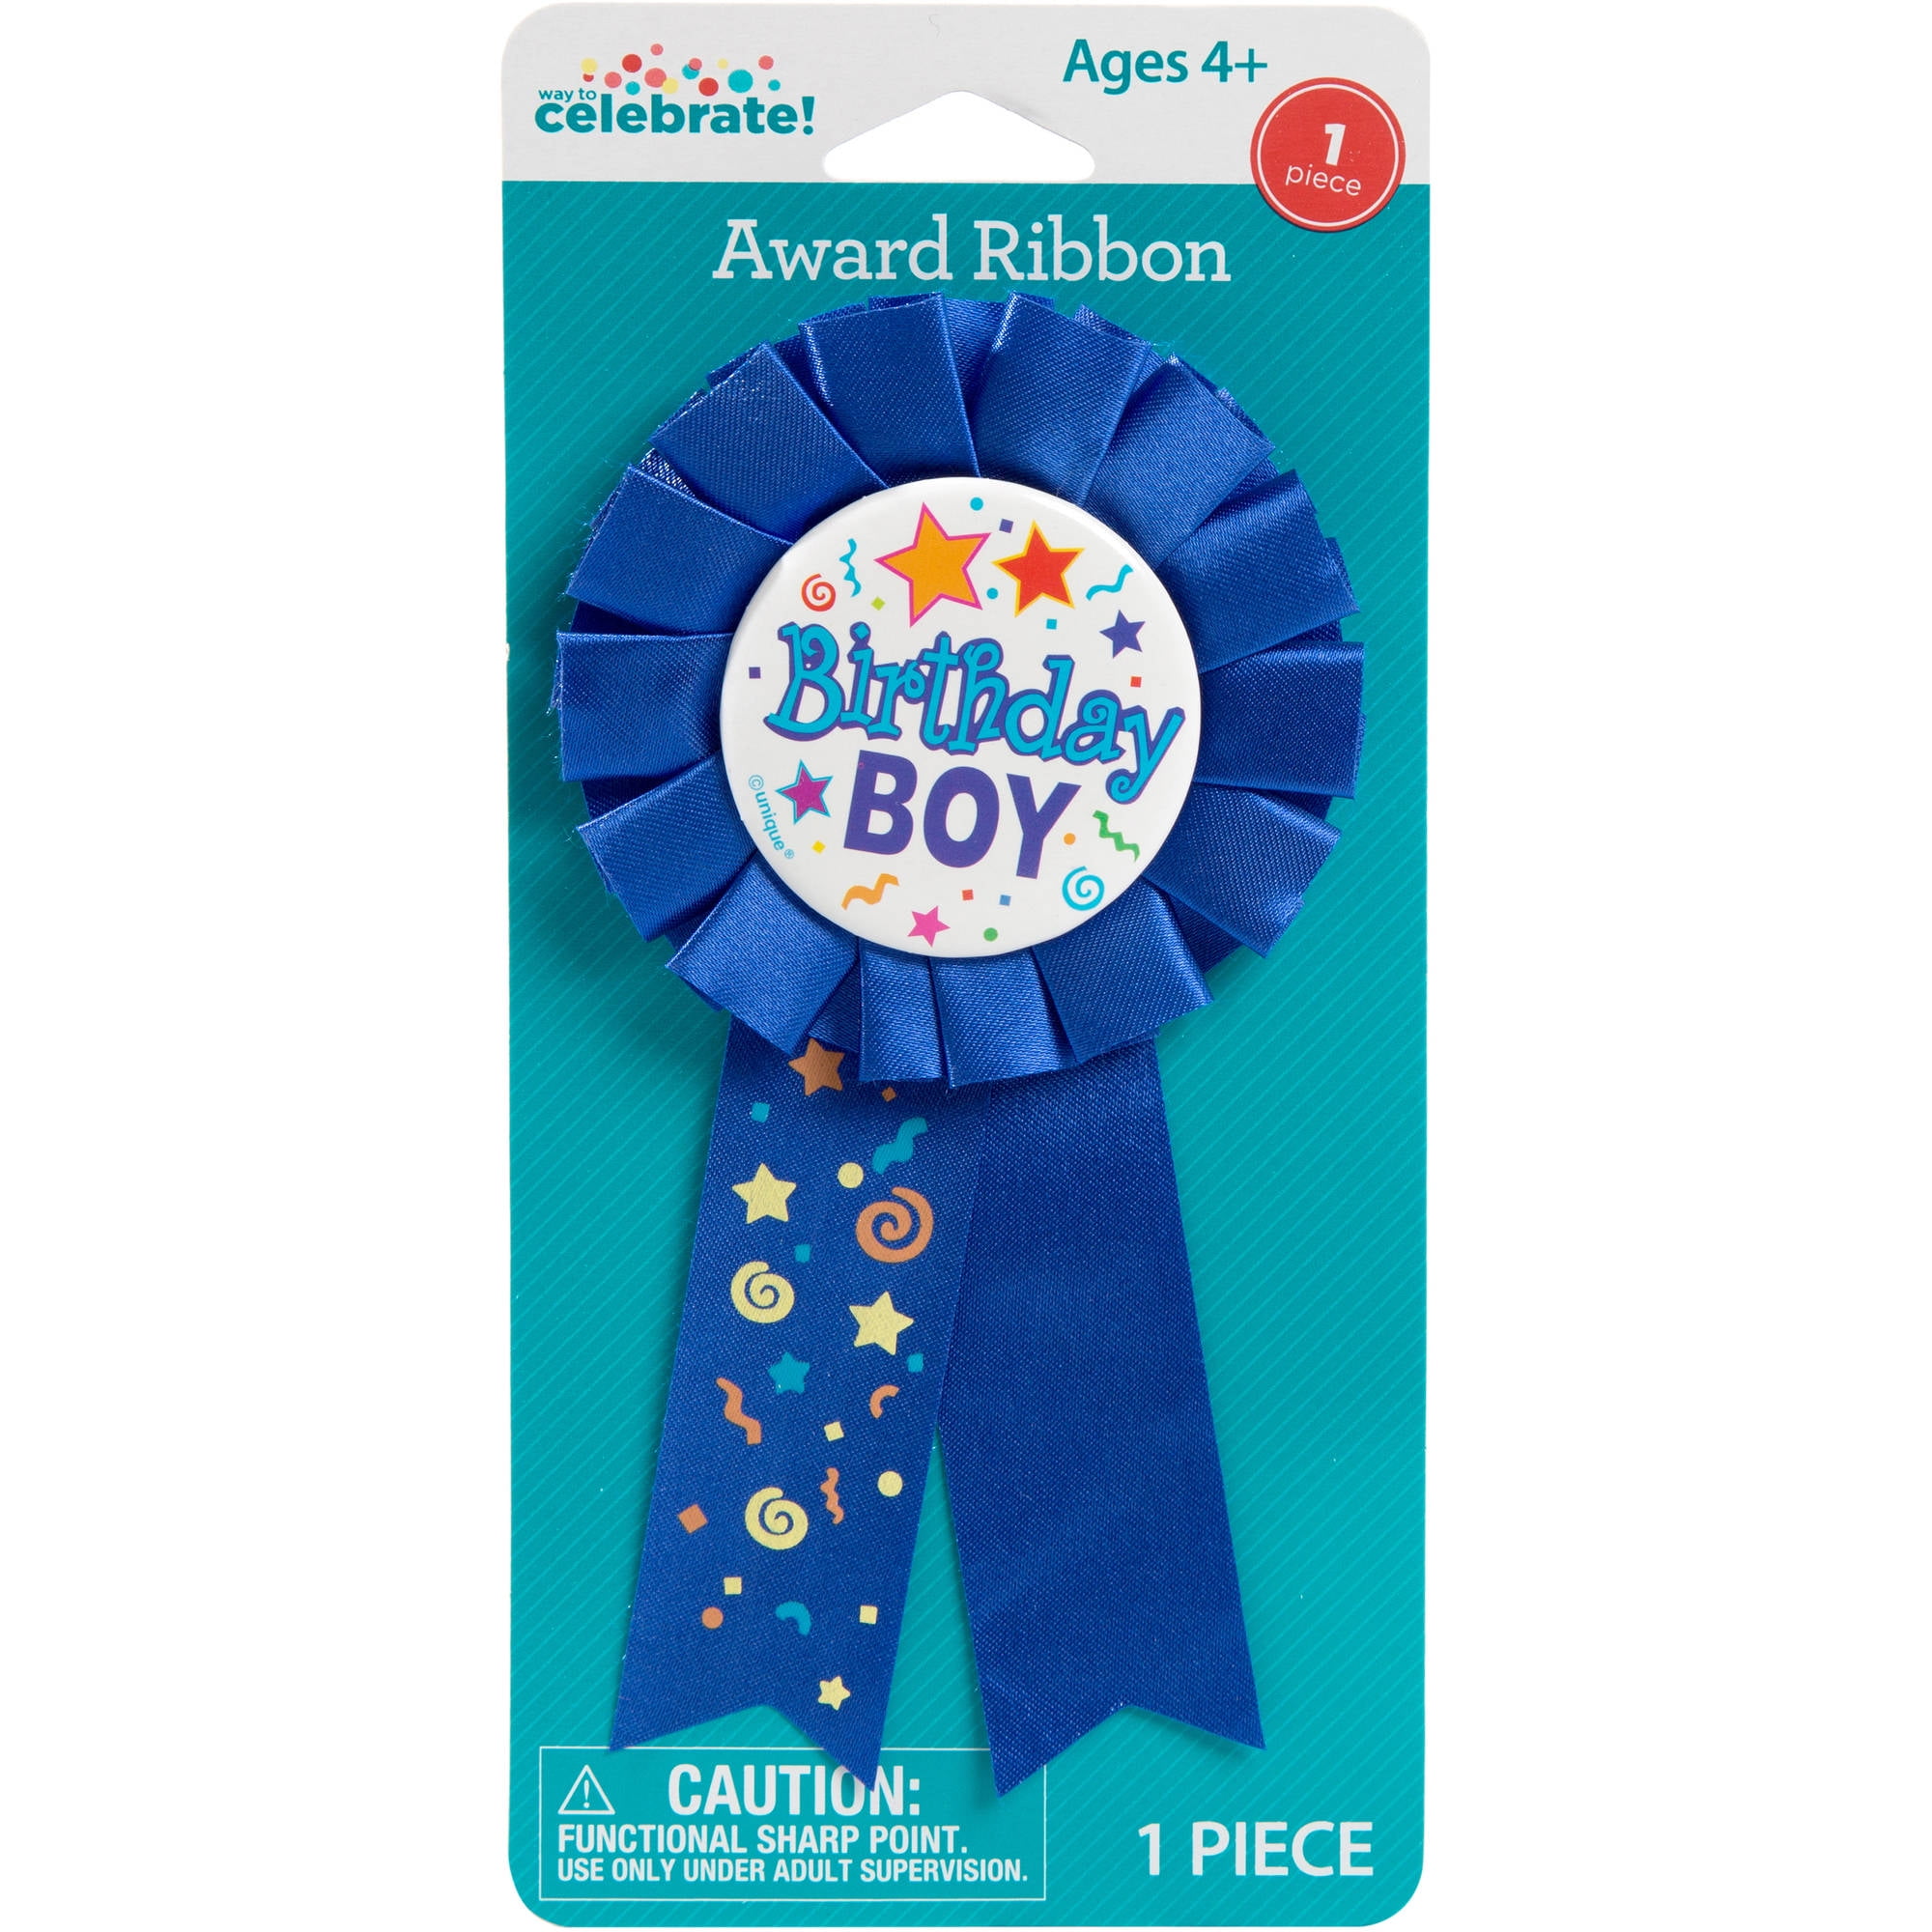 Way to Celebrate Birthday Boy Award Ribbon-Blue